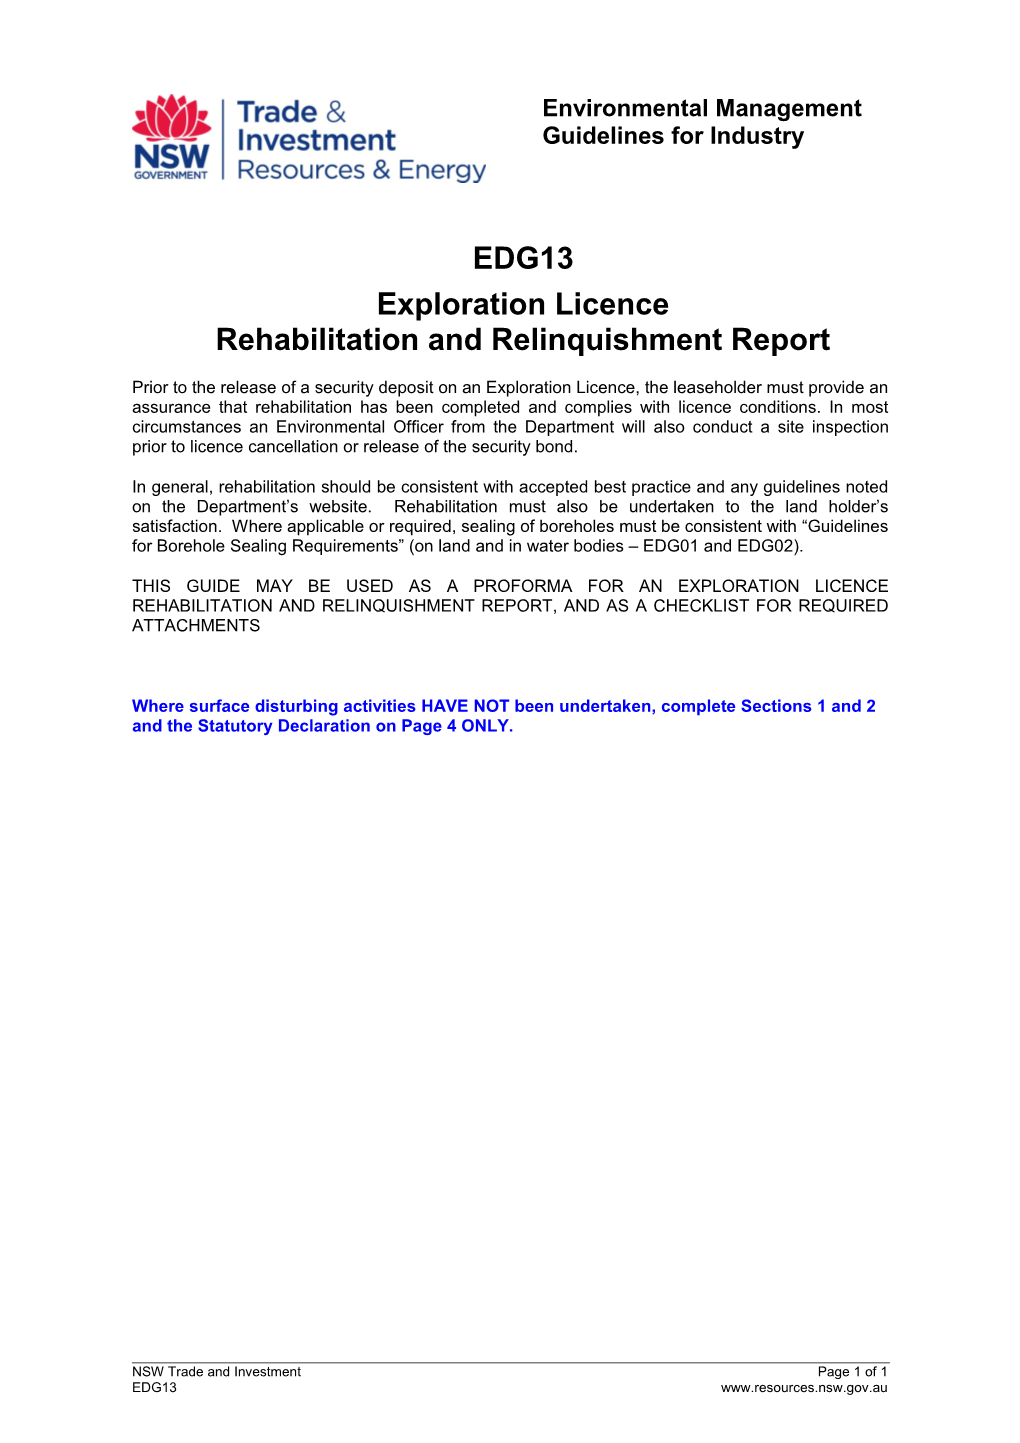 Exploration Licence Rehabilitation and Relinquishment Report